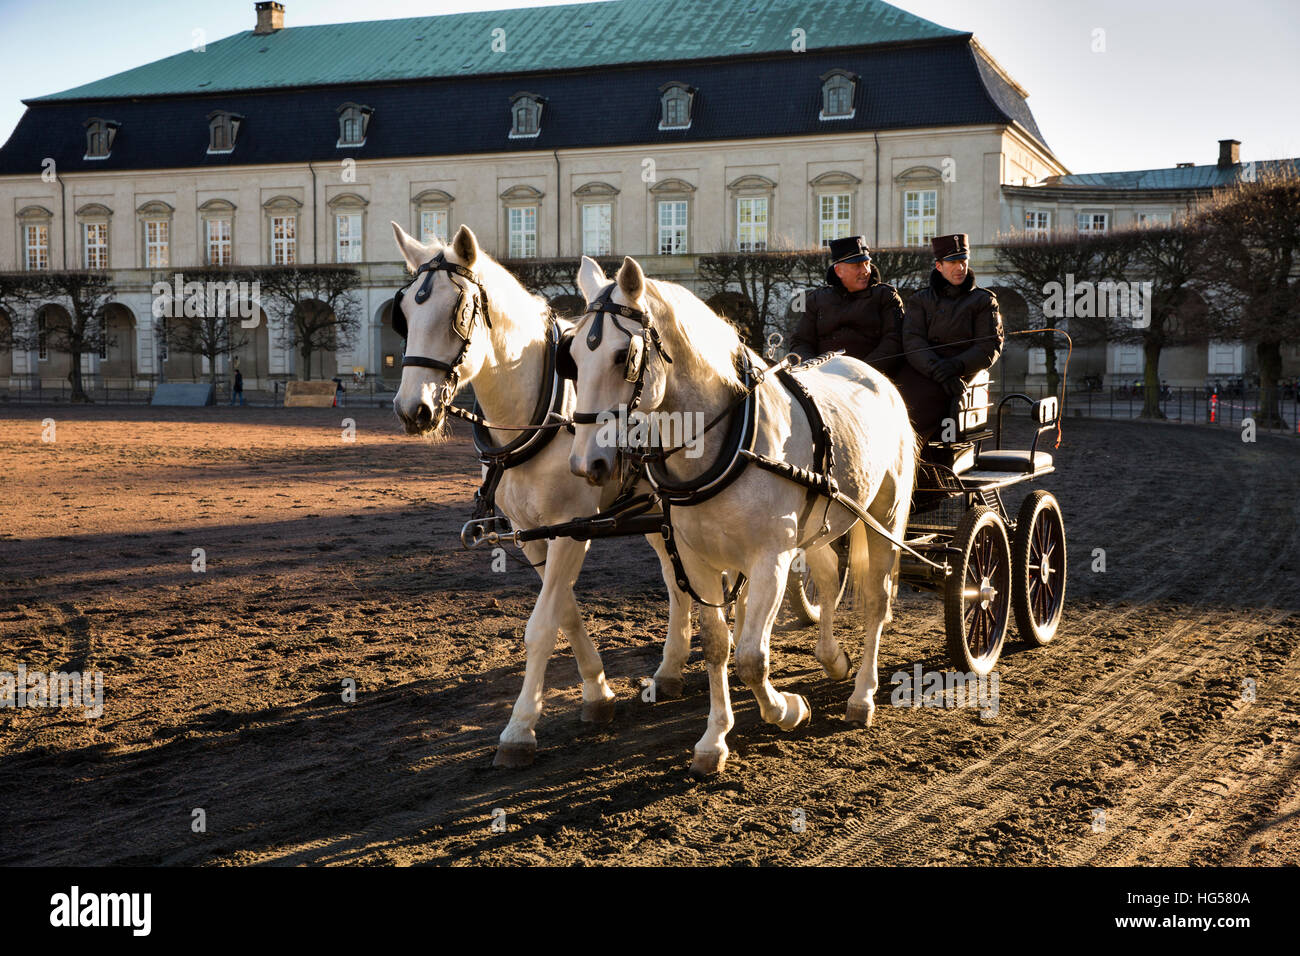 Dinamarca, Copenhague, Christiansborg Palace, ejercer el transporte de caballos en el patio del palacio Foto de stock